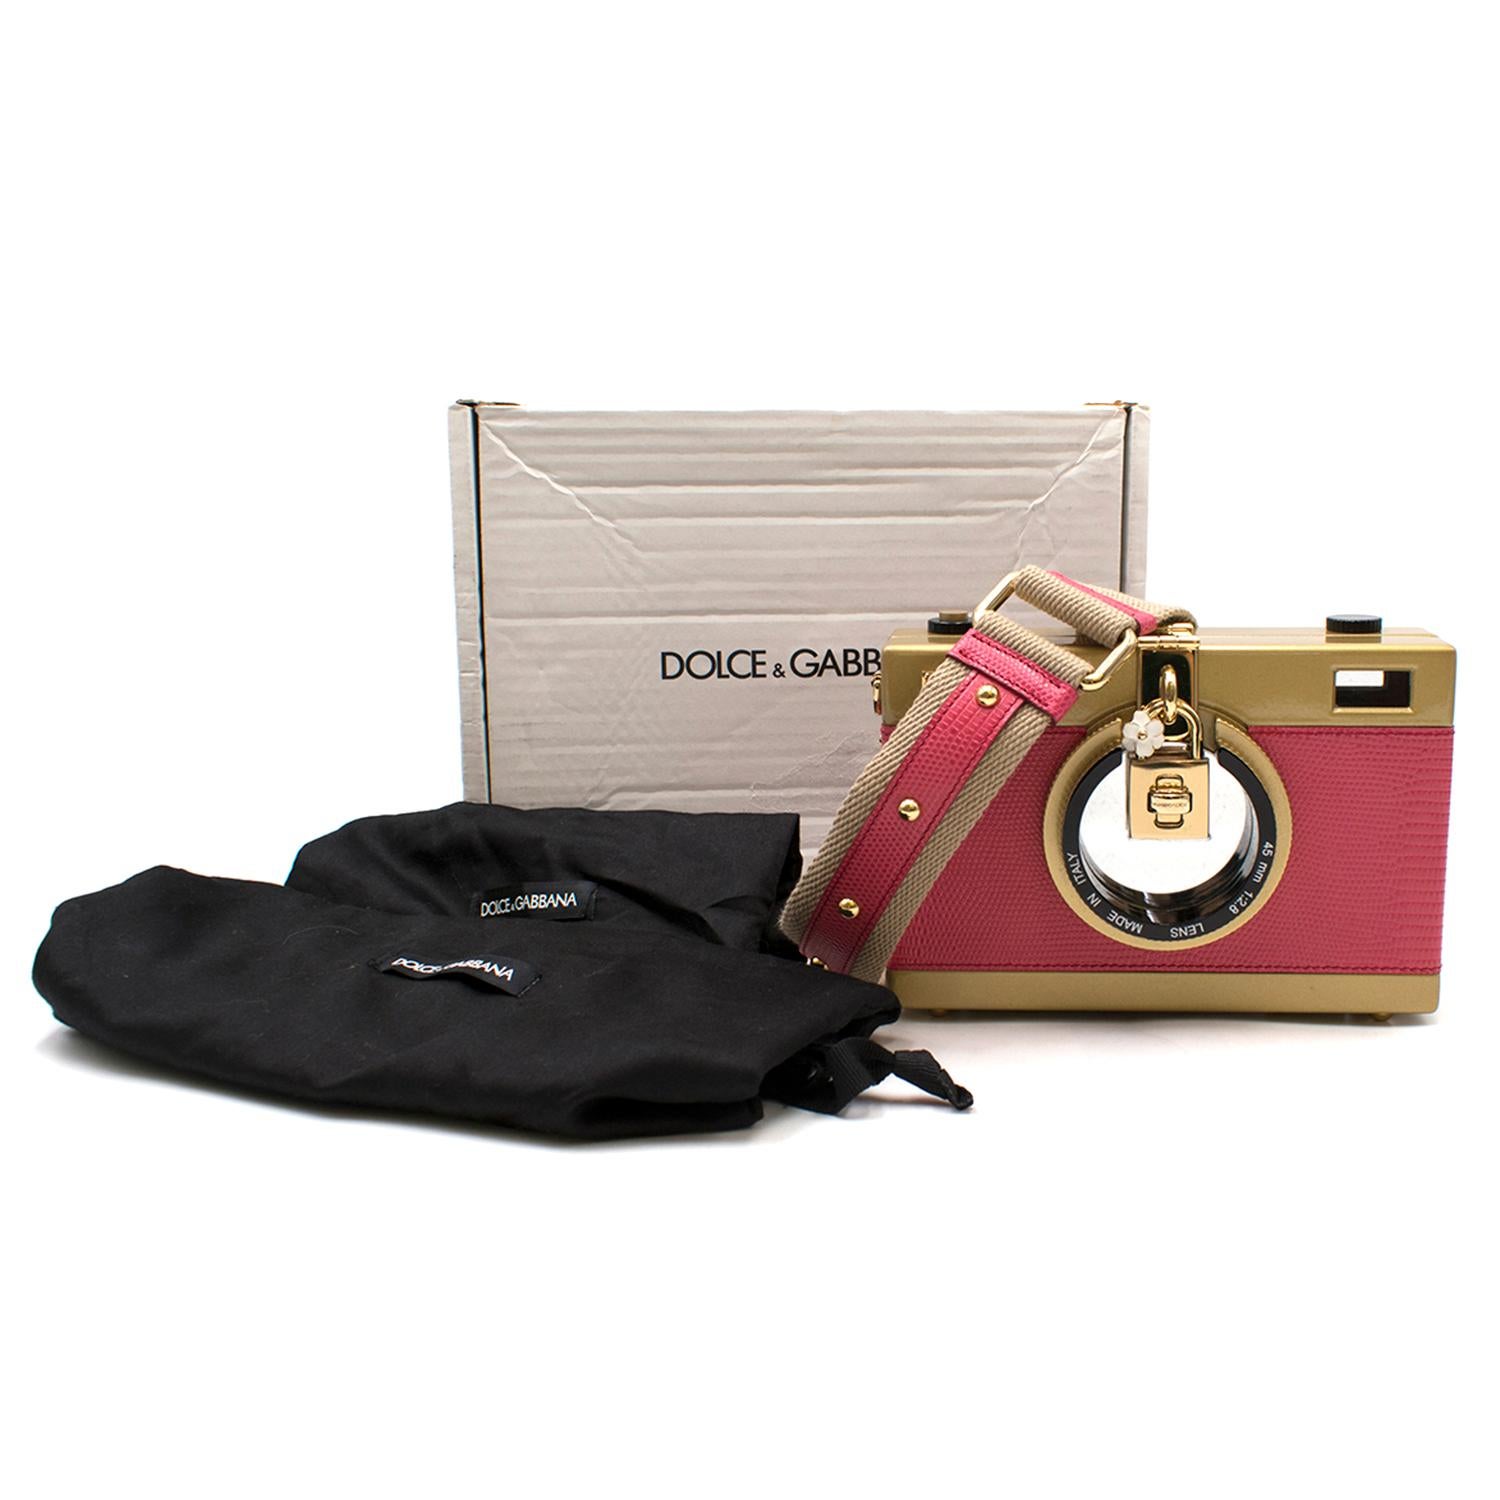 Dolce & Gabbana Pink Camera Bag

-Camera clutch bag with padlock clasp
-Gold toned hardware
-Black velvet lining with one slot
-Adjustable shoulder strap with gold toned studs
-Gold toned plates embossed with Dolce & Gabbana

Size: One